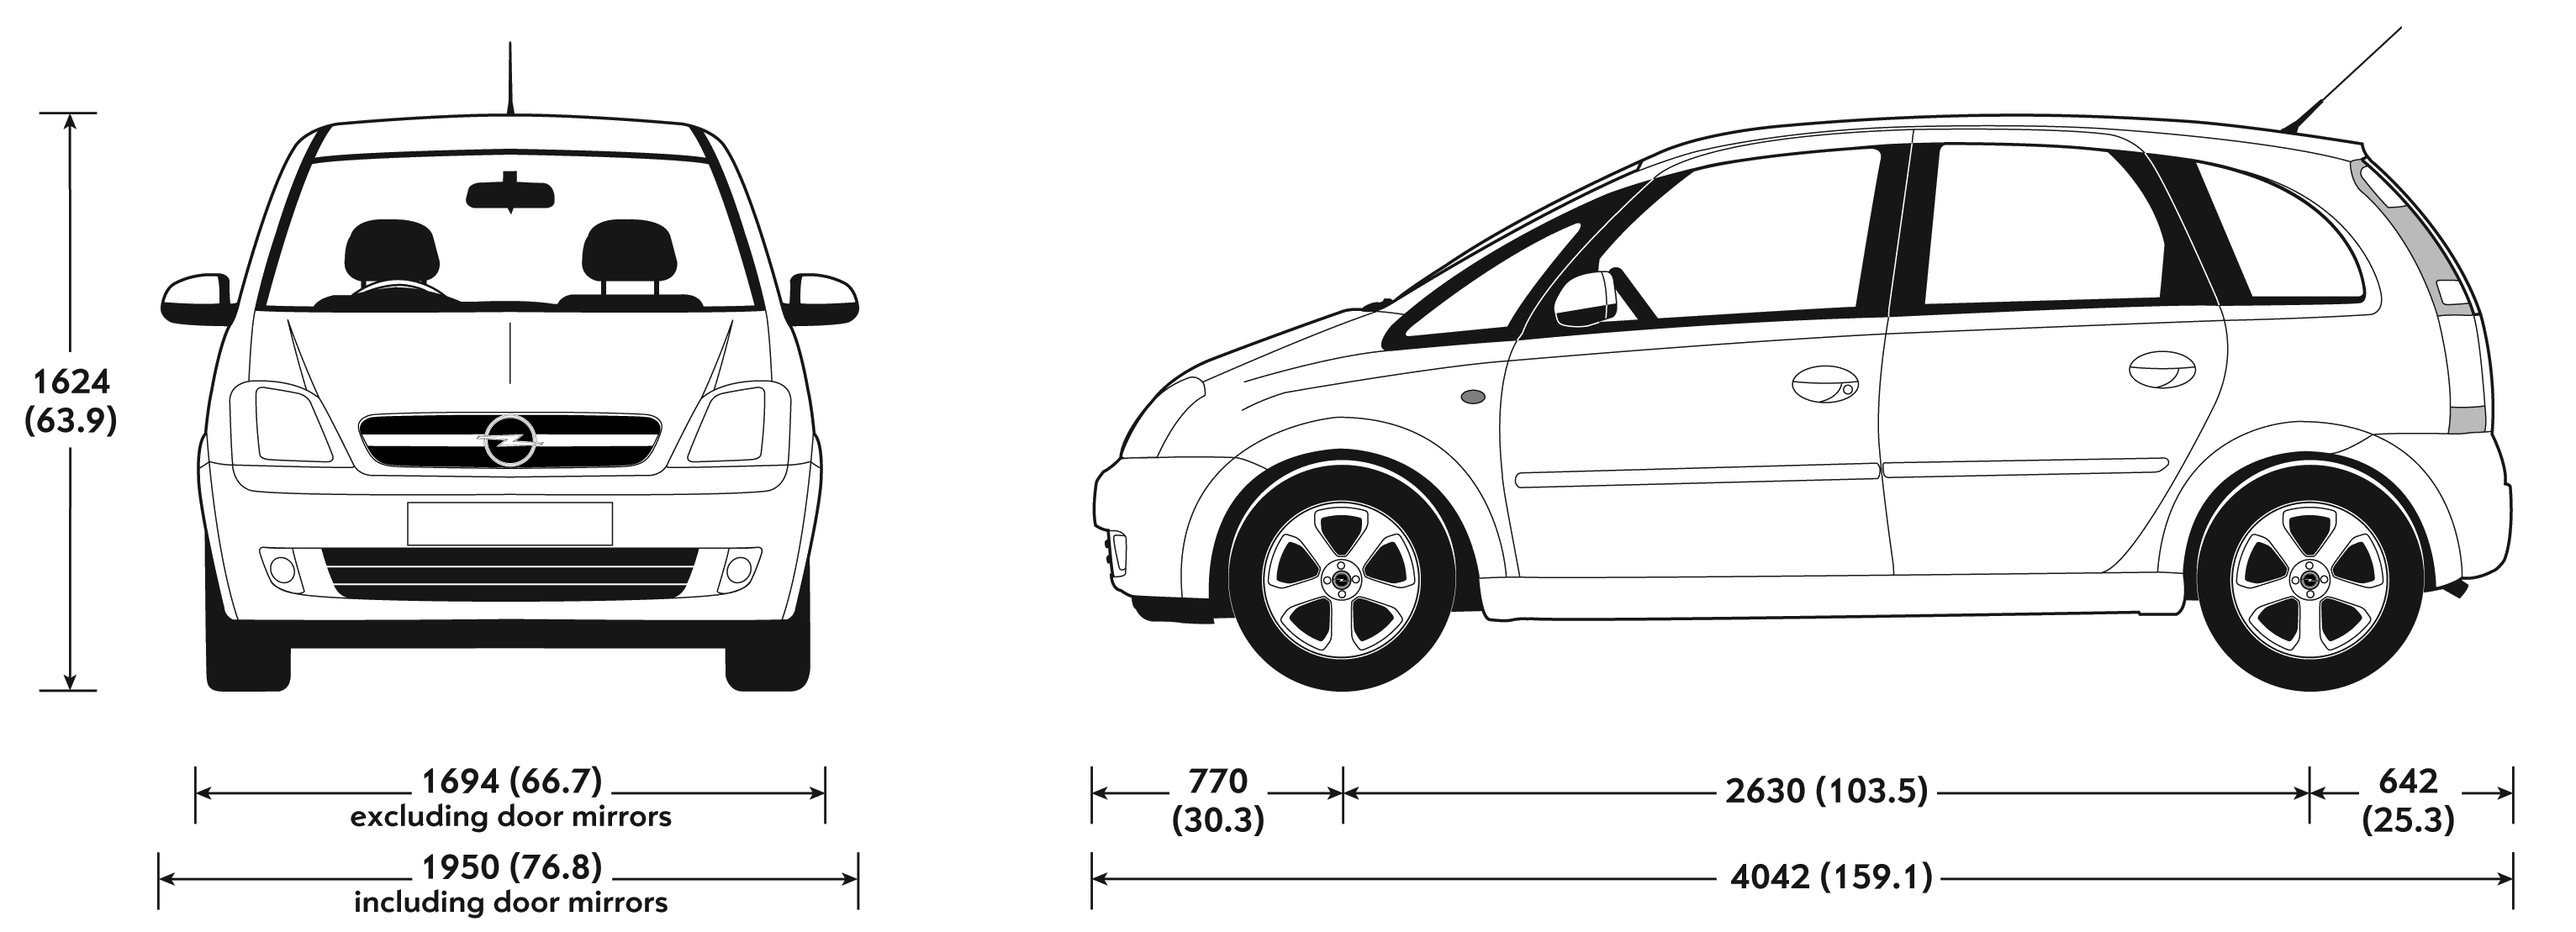 2007 Opel Meriva Microvan blueprints free - Outlines